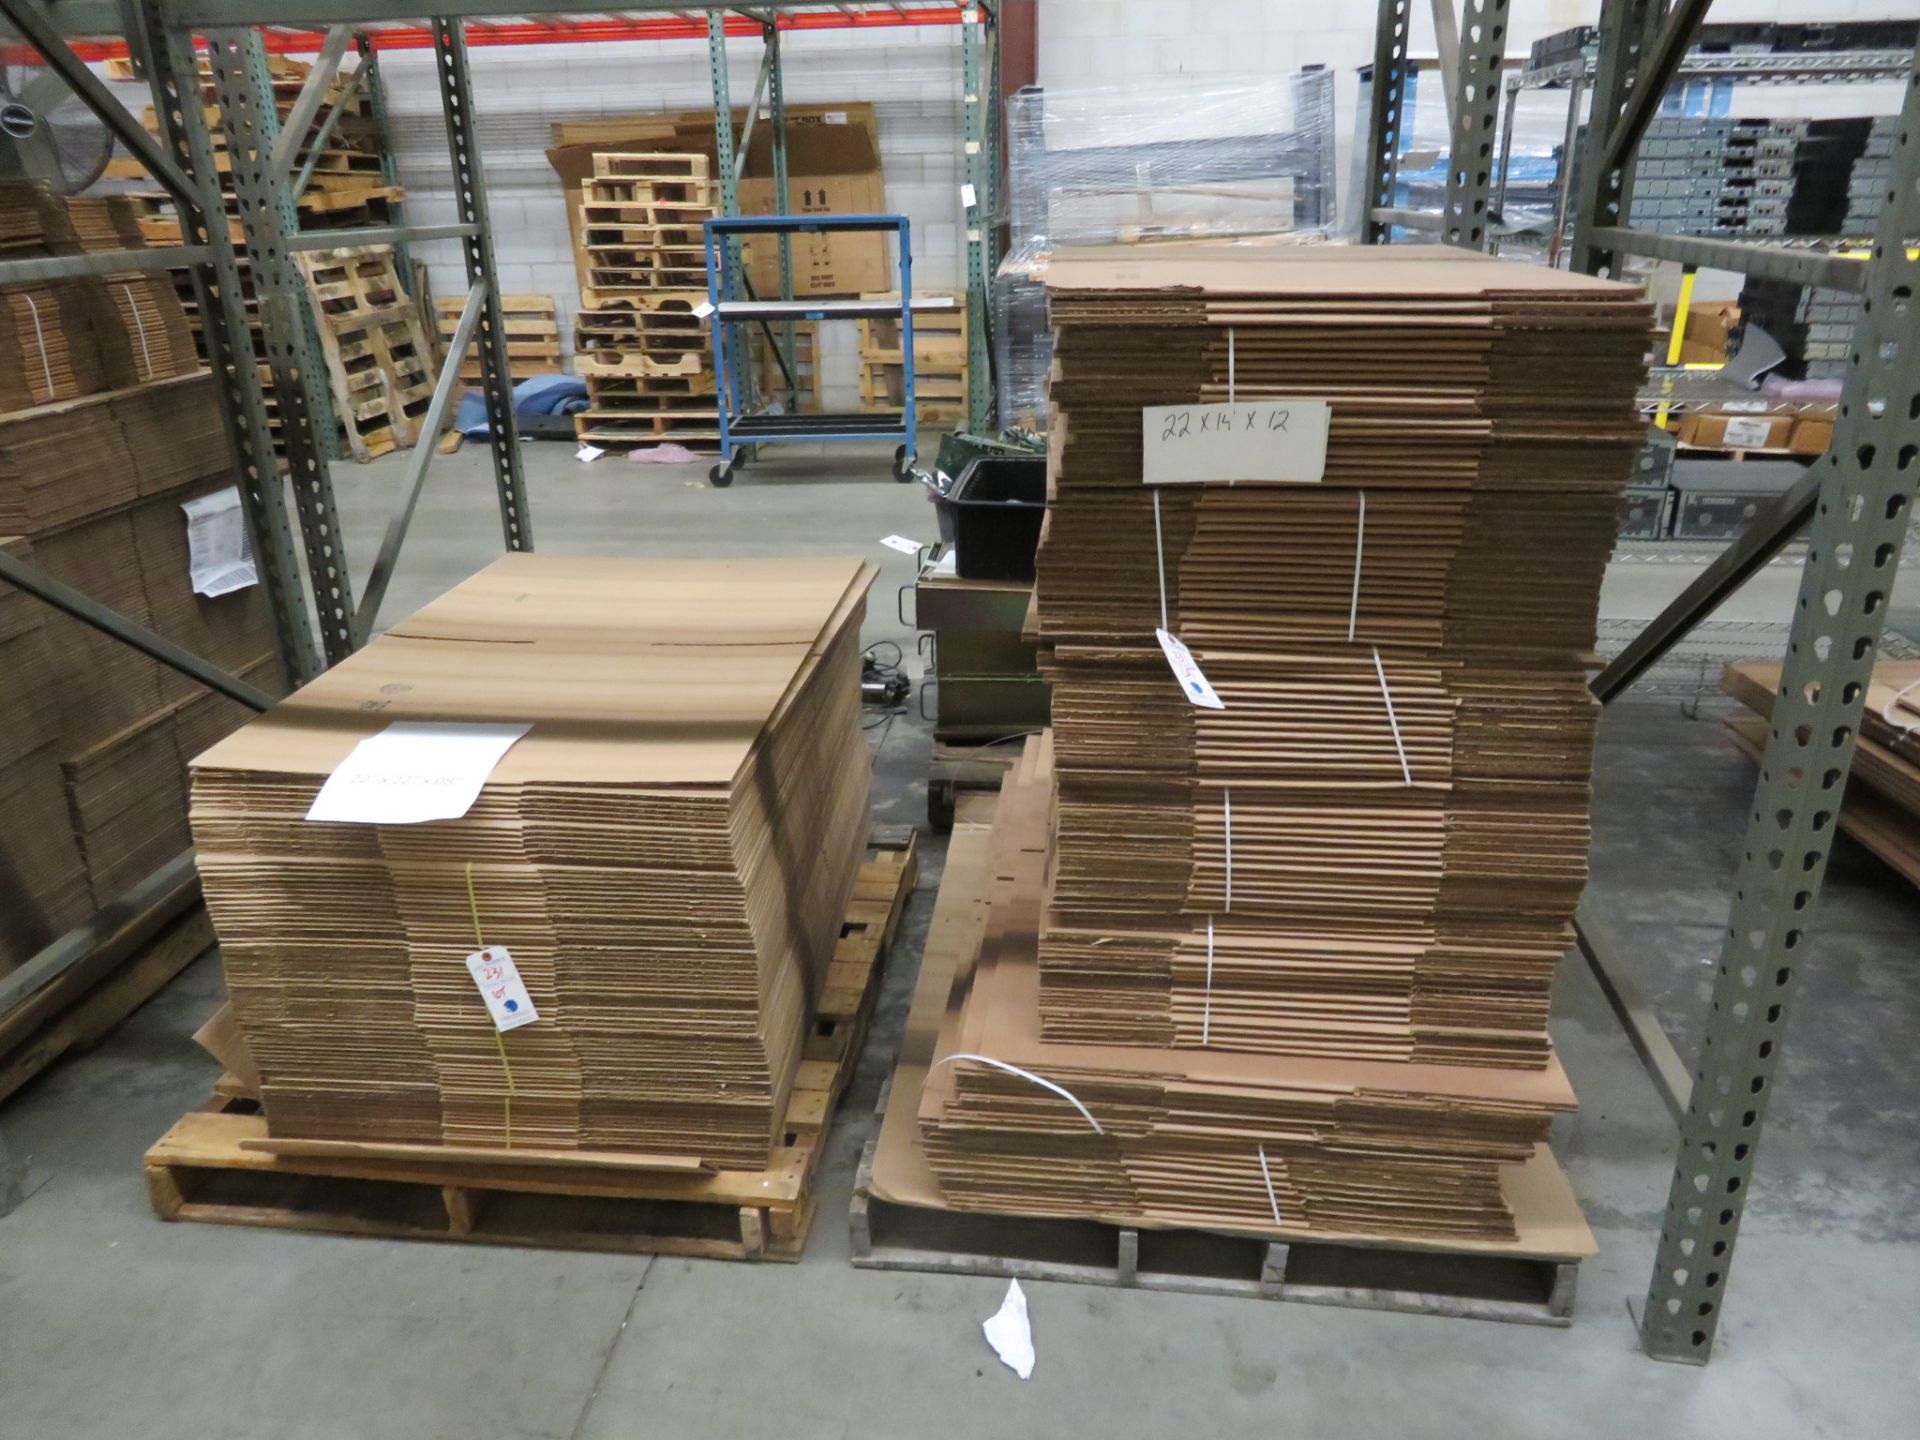 [LOT] Asst. Corrugated Cardboard Boxes in 1 Bay (22x22x8, 22xx14x12, etc.)